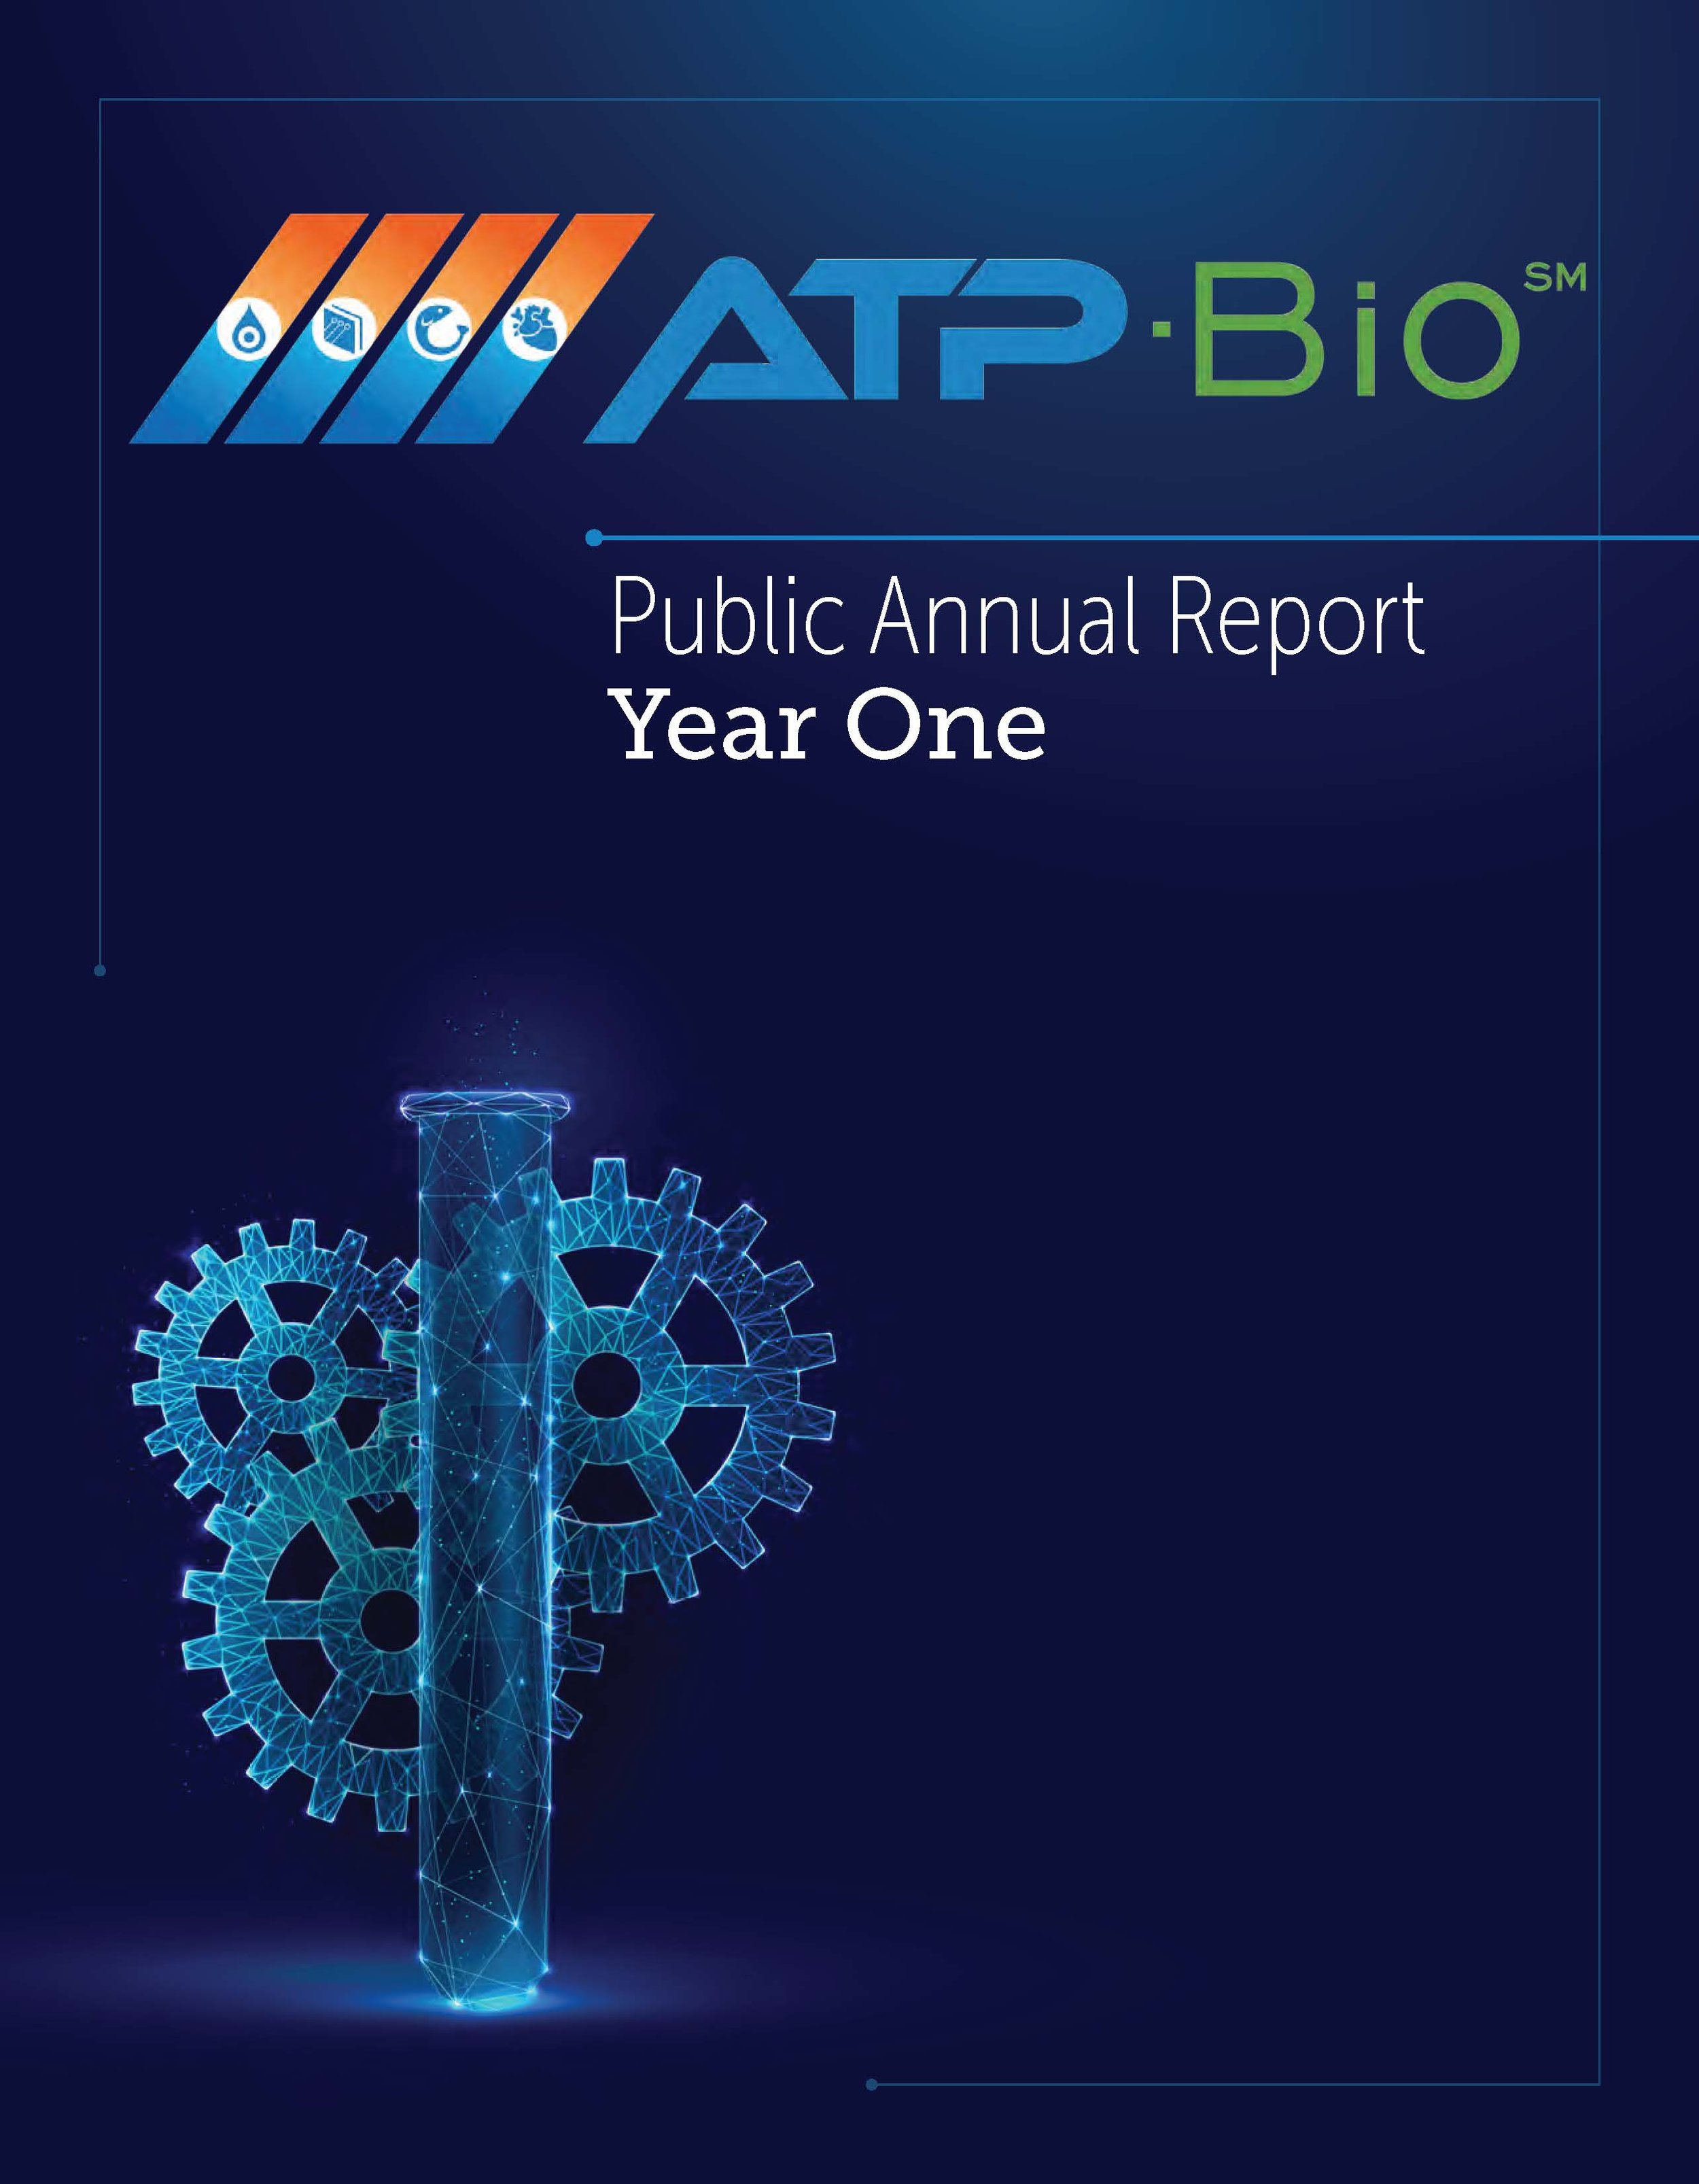 YEAR 1 - Public Annual Report